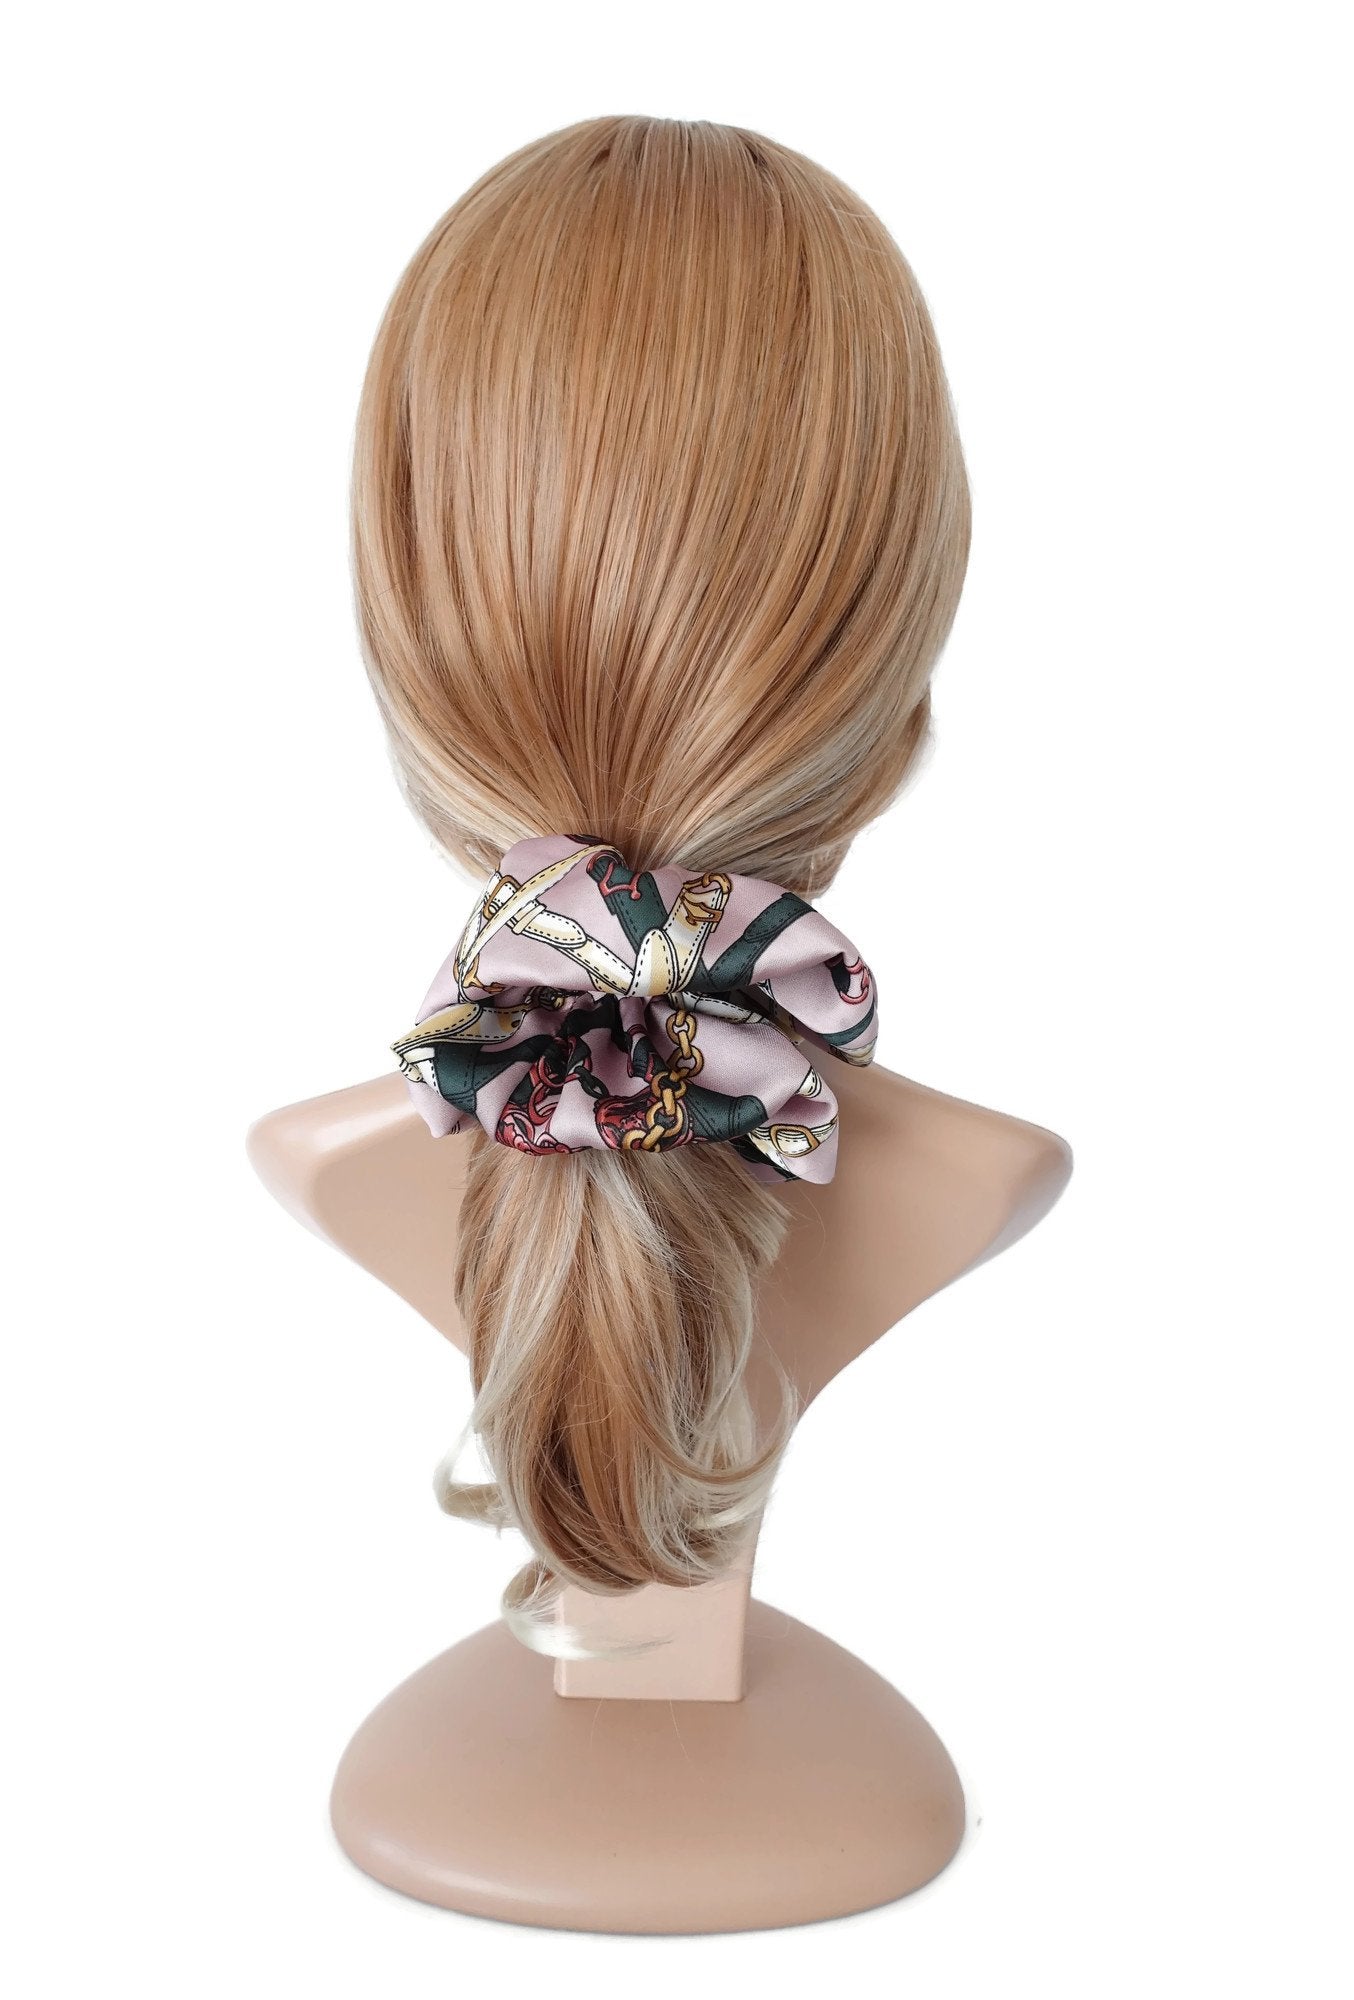 veryshine.com scrunchies/hair holder chain print oversized scrunchies large scrunchie stylish women hair ties